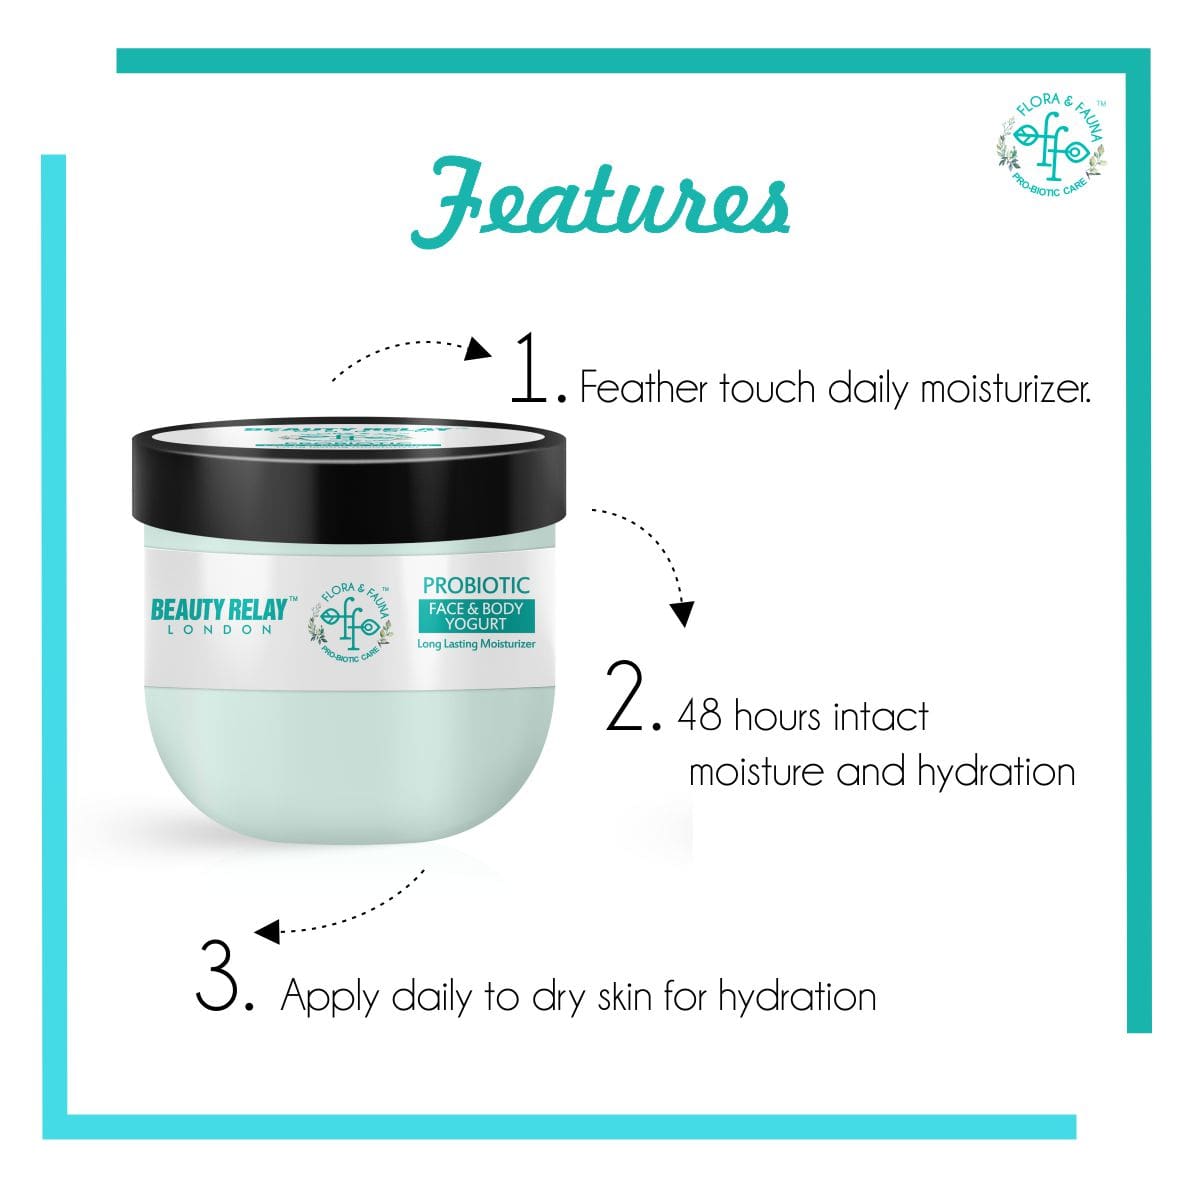 Face & Body Yogurt features - Beauty Relay India